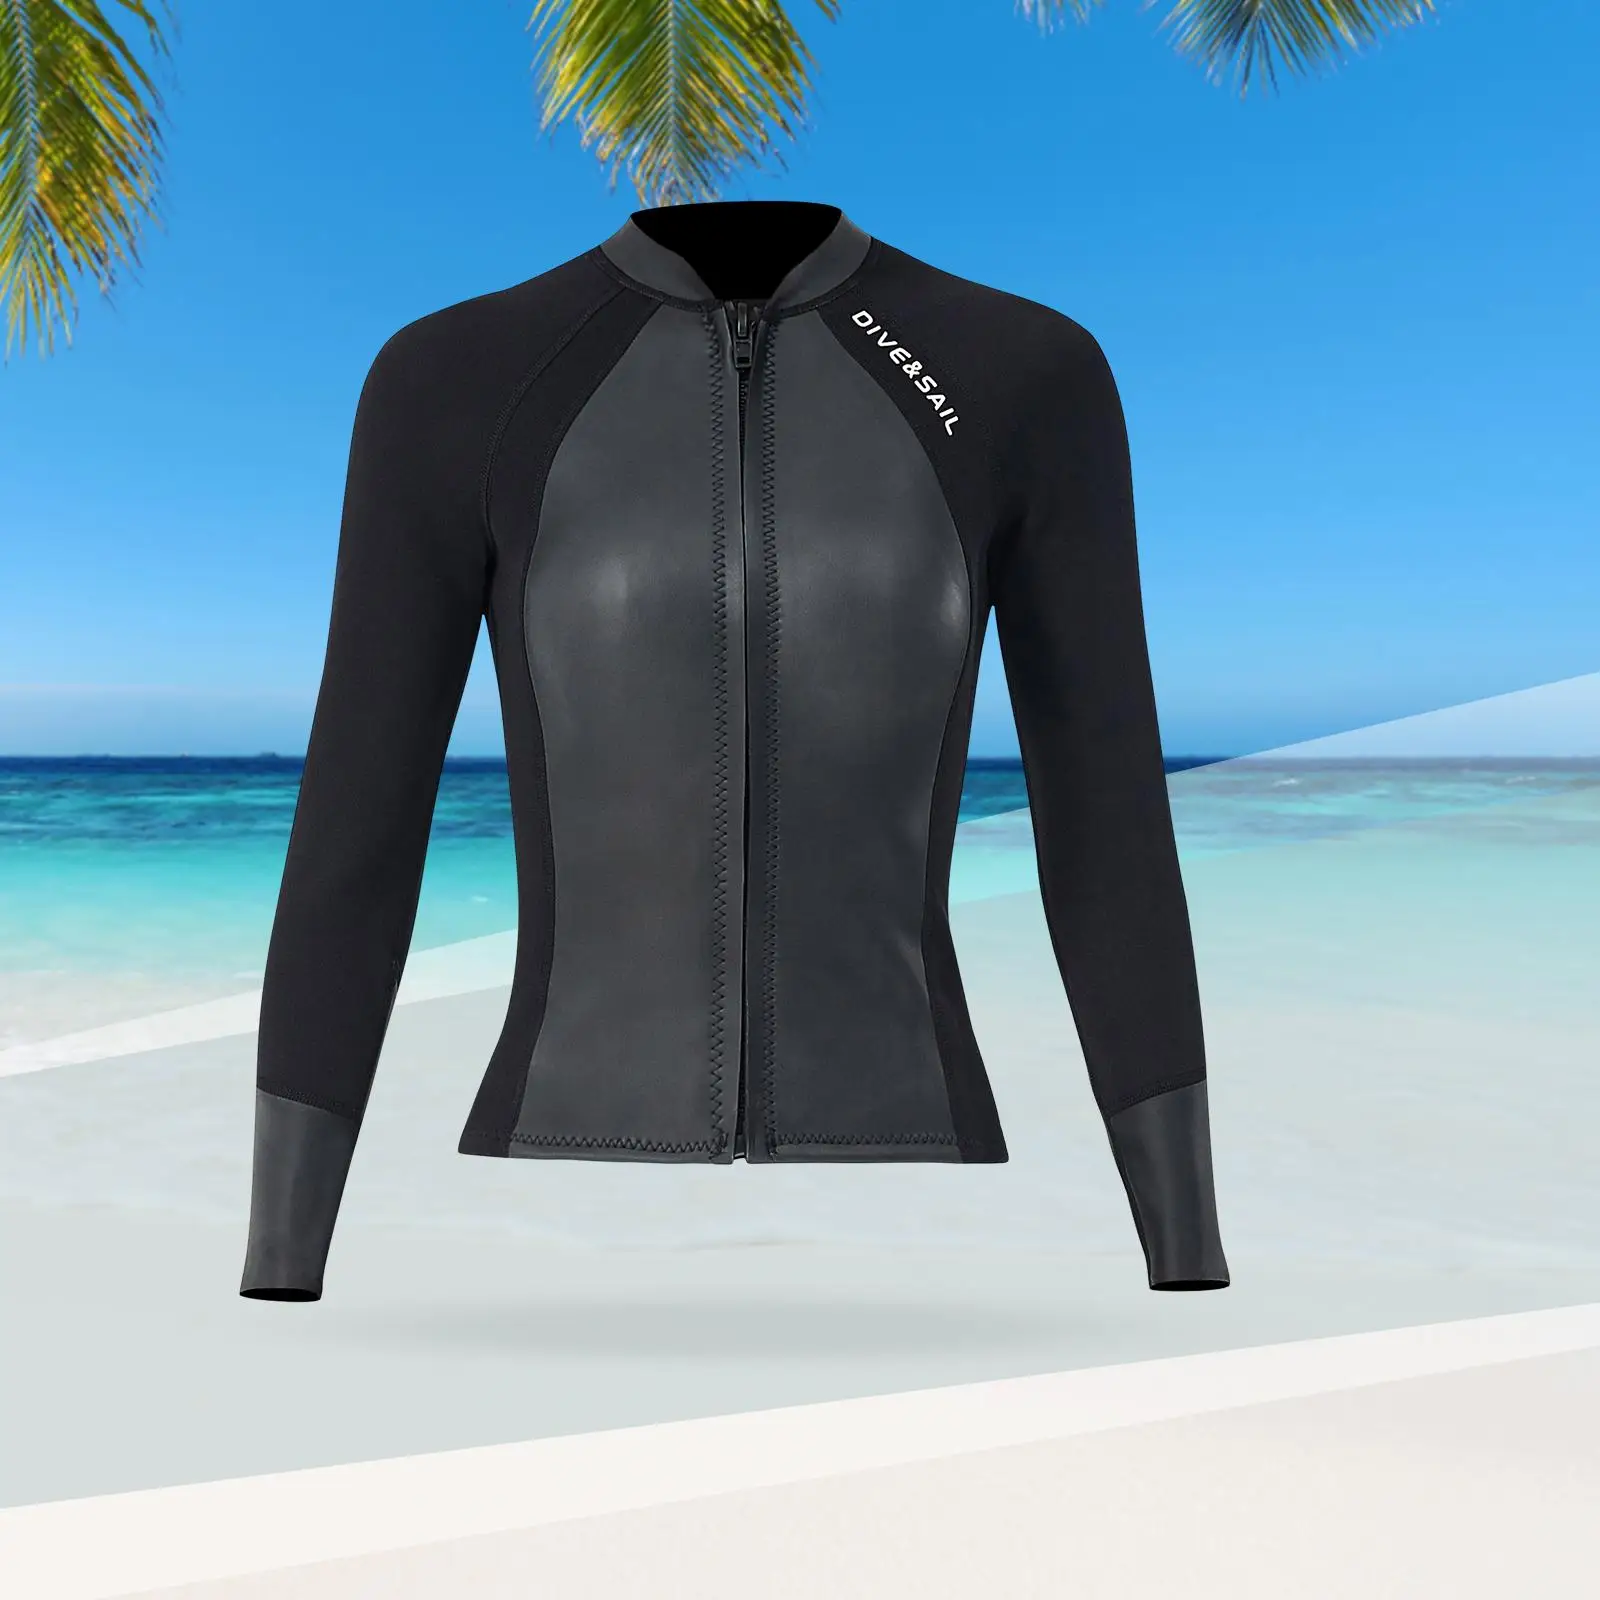 Neoprene Wetsuit Top Scuba Diving Suit Front Zipper Jacket Long Sleeve Keep Warm Wet Suit for Swimming Canoeing Kayaking Surfing